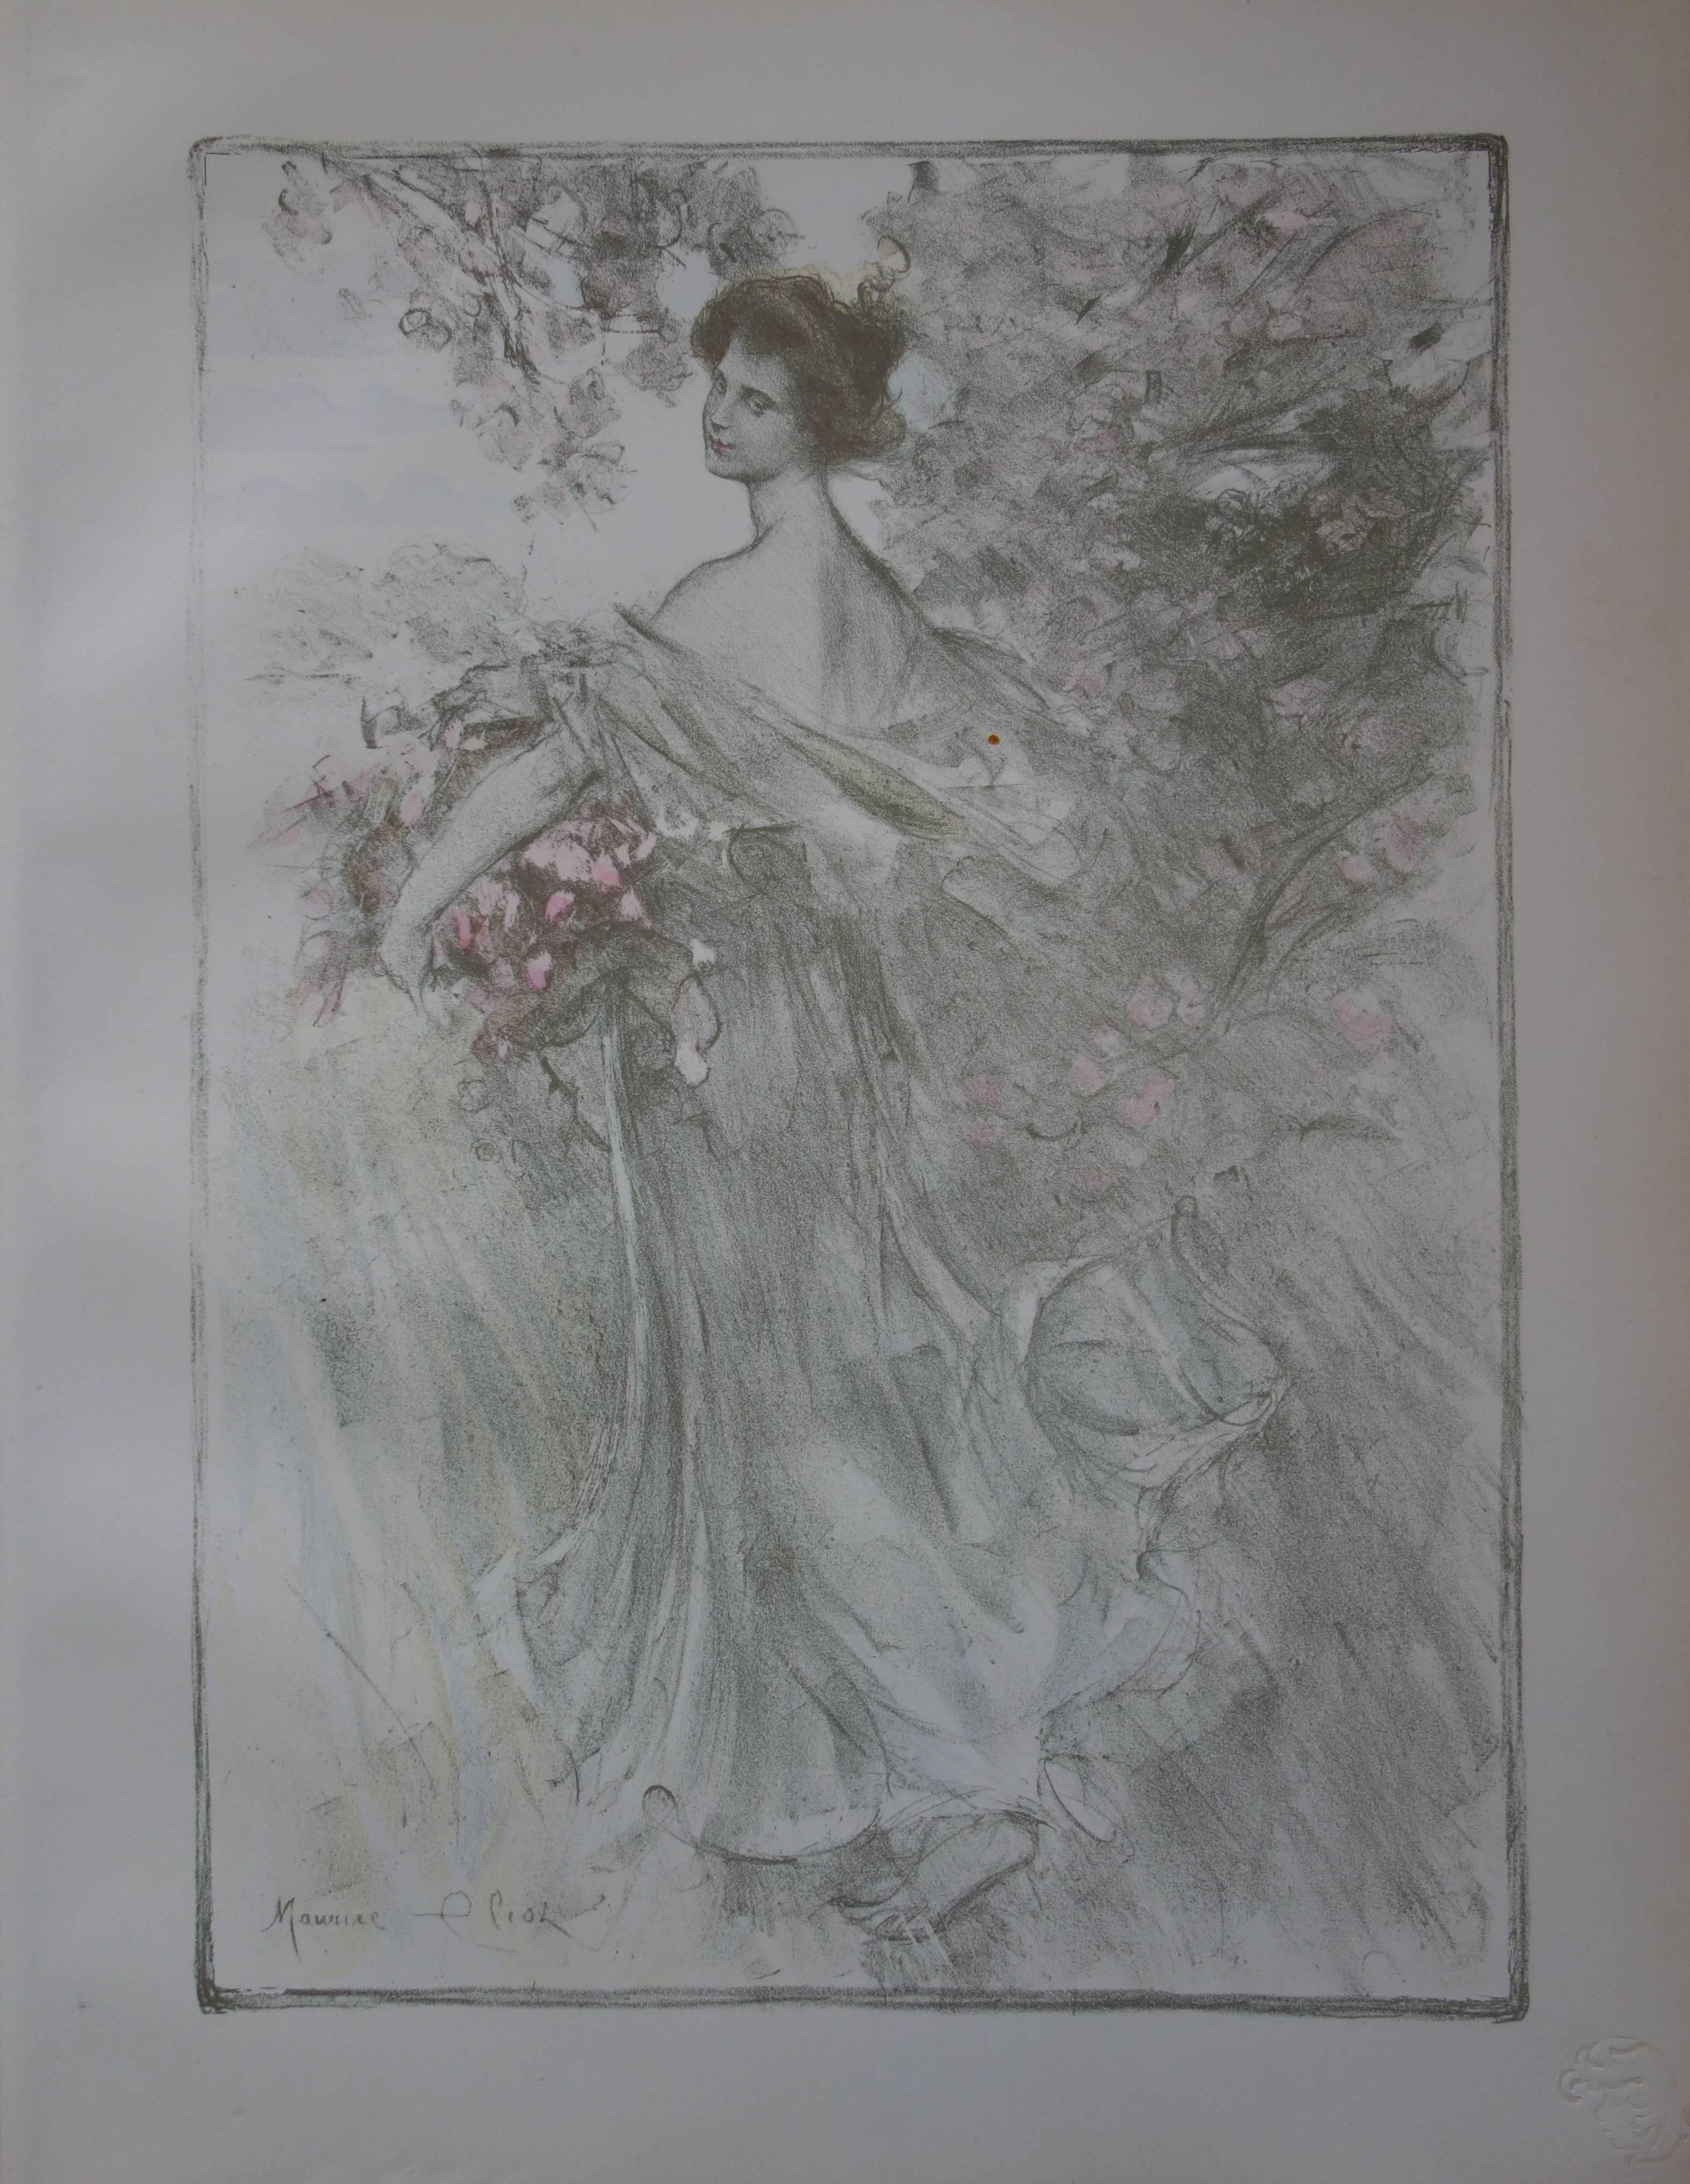 Maurice Eliot Figurative Print - Spring - Original lithograph - 1897